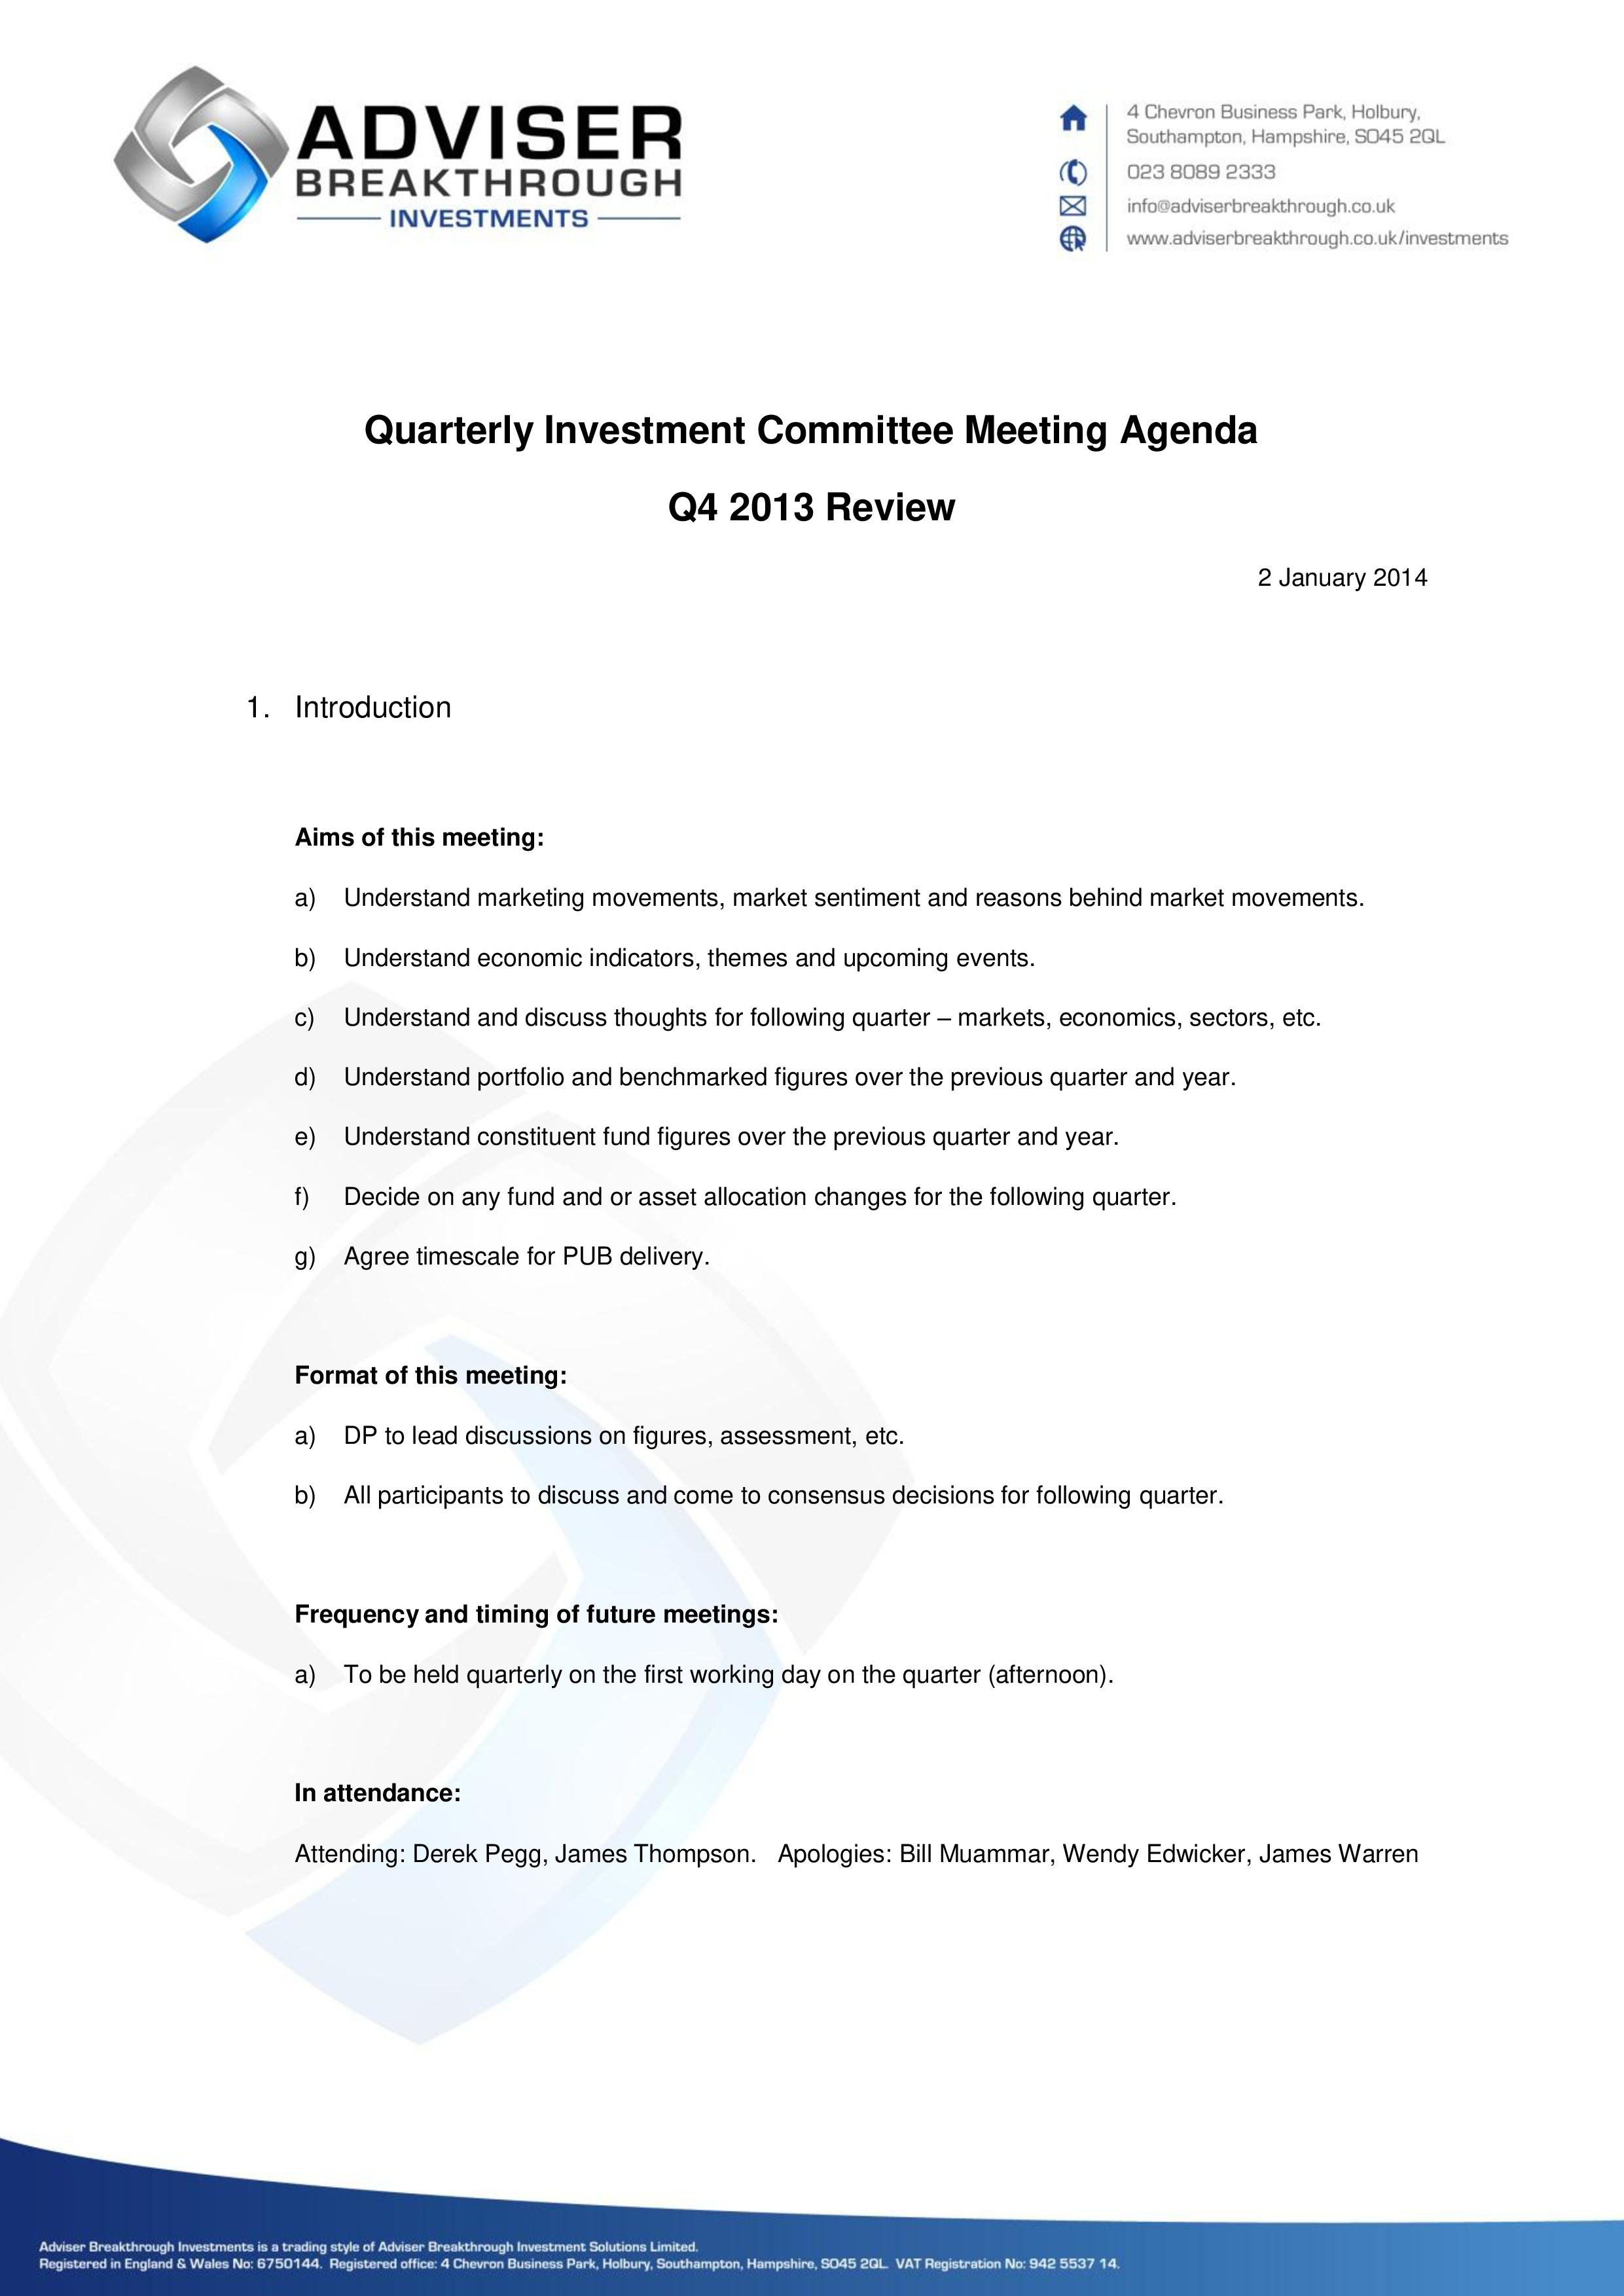 Investment Committee Agenda 模板